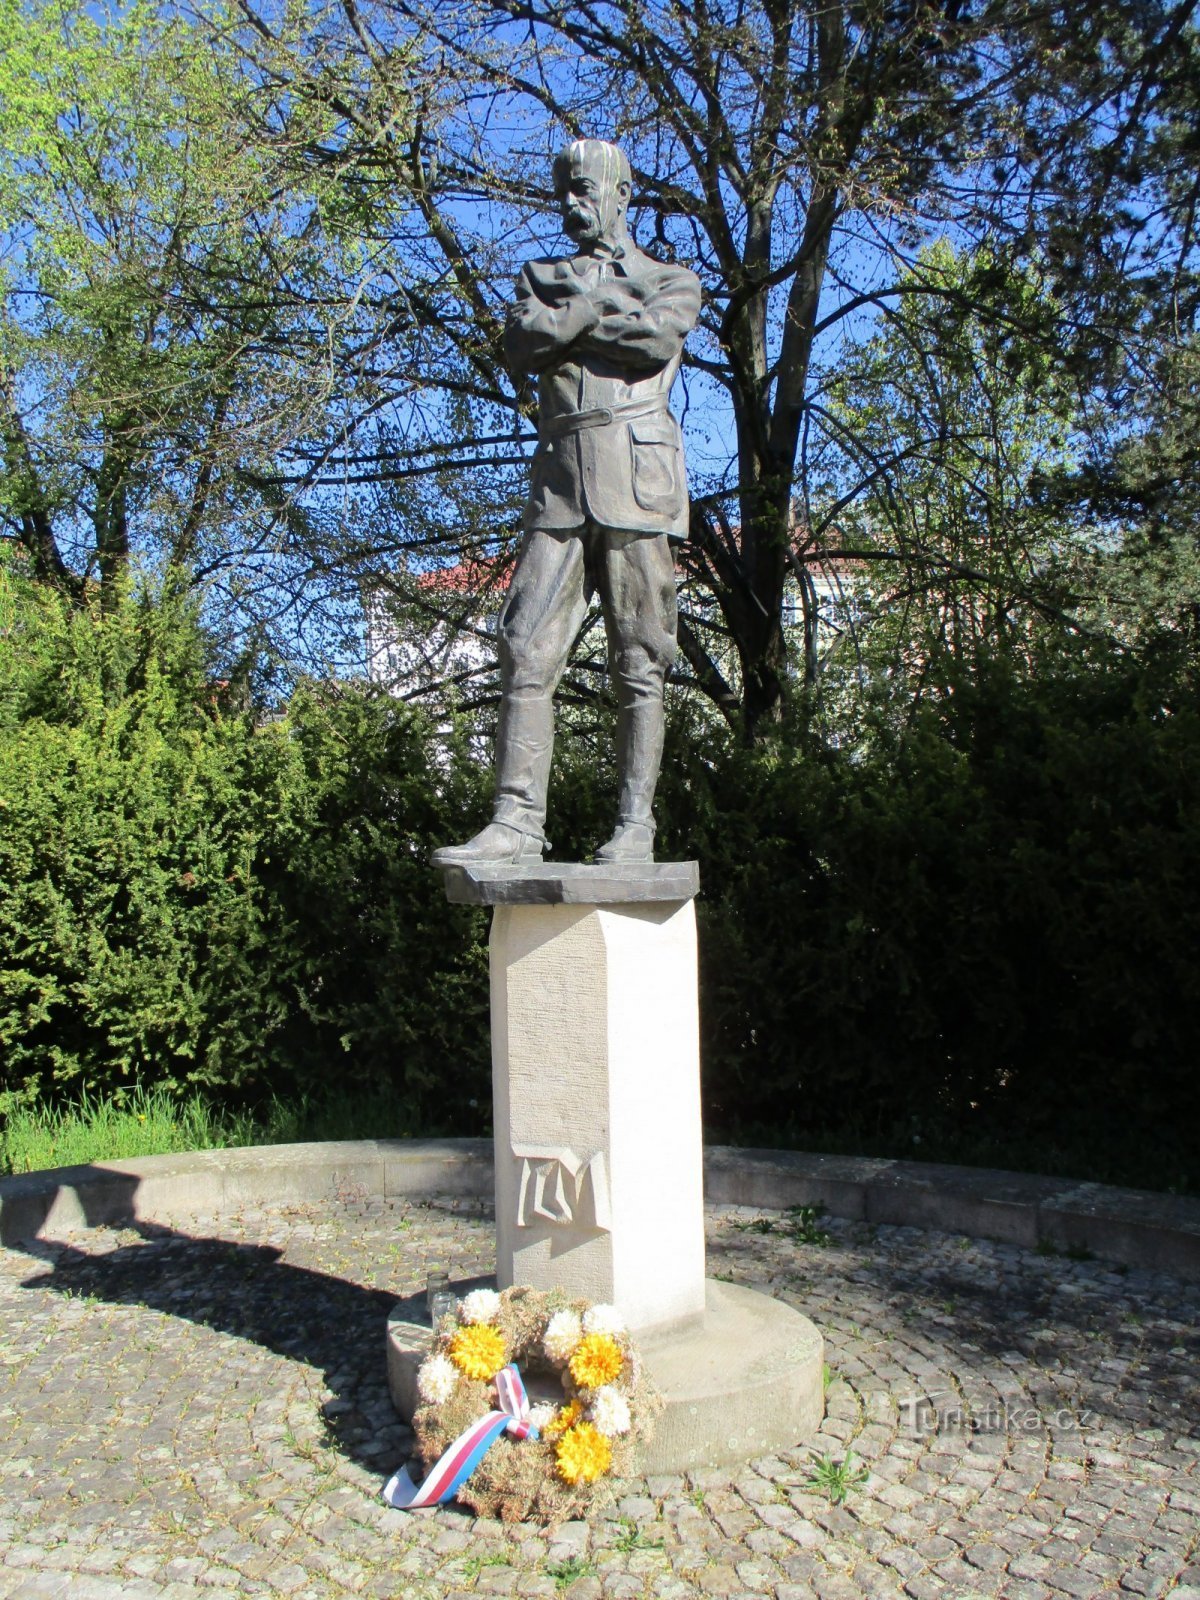 Spomenik TG Masaryku (Jaroměř, 22.4.2020. april XNUMX)